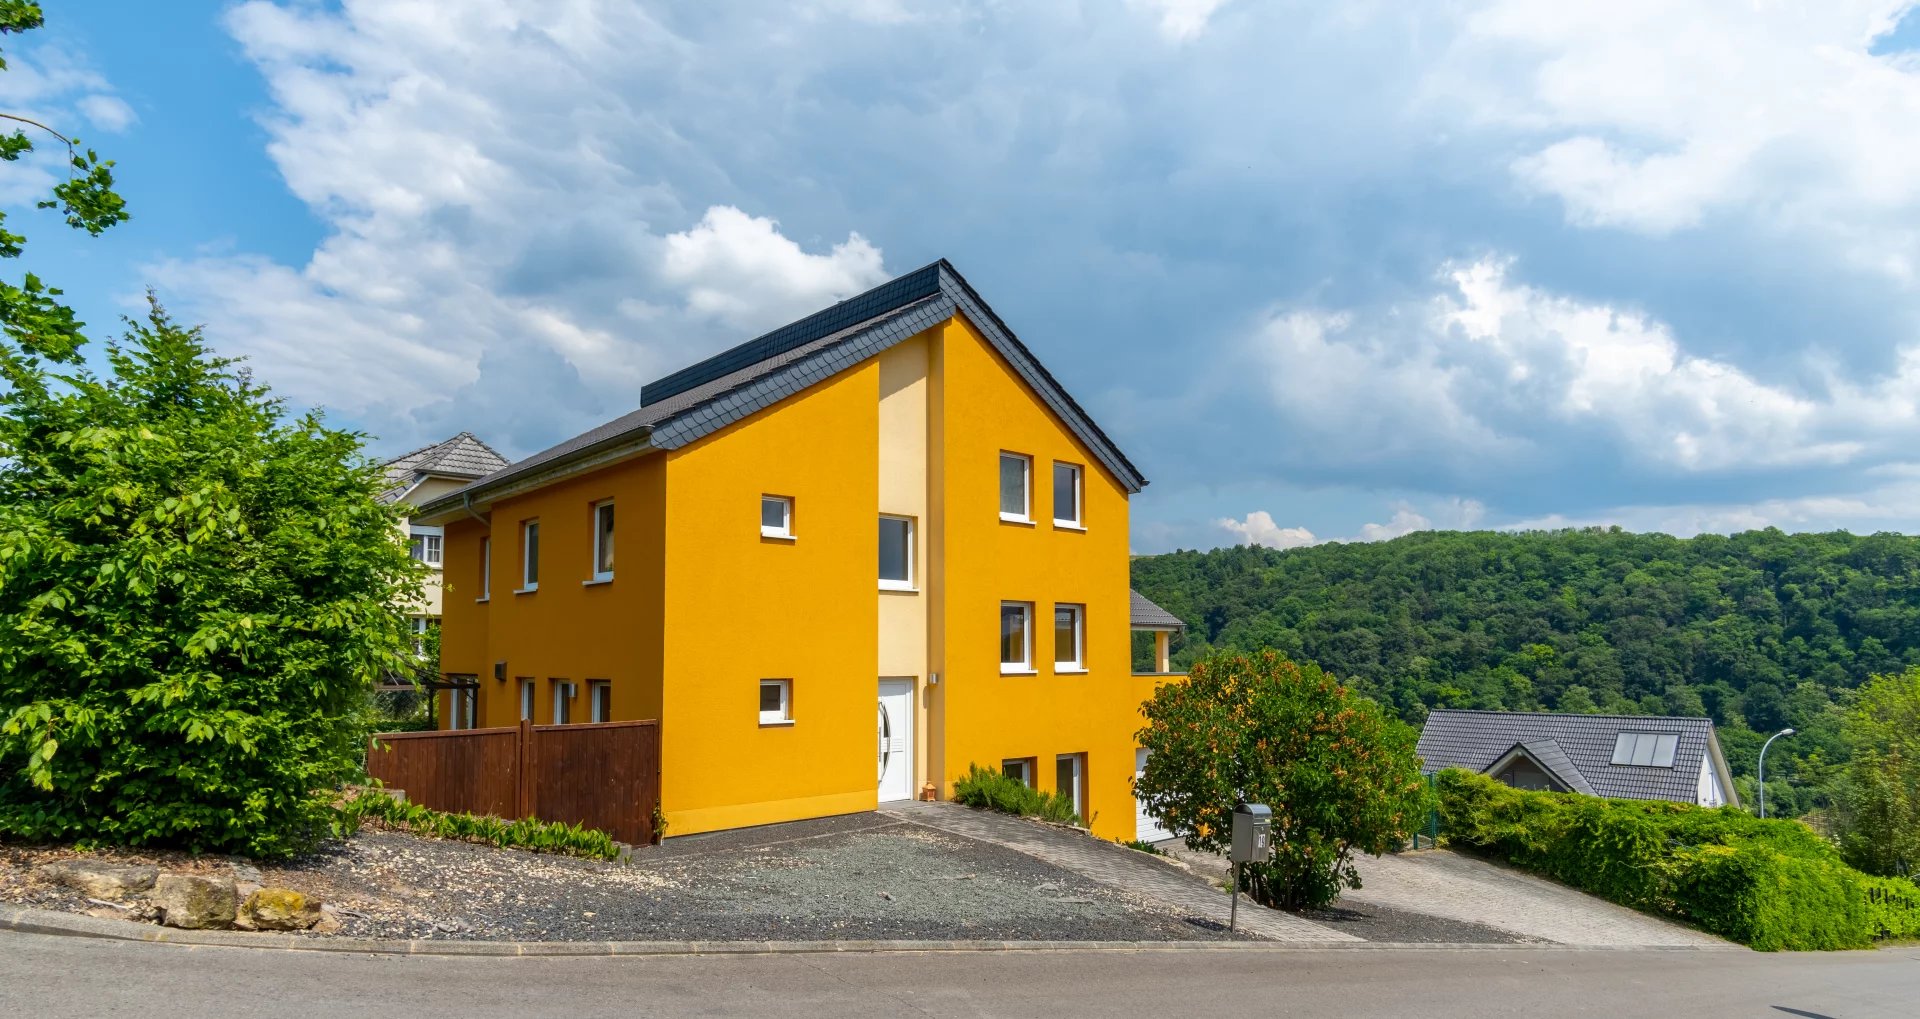 House with 5 bedroom for rent in Moersdorf